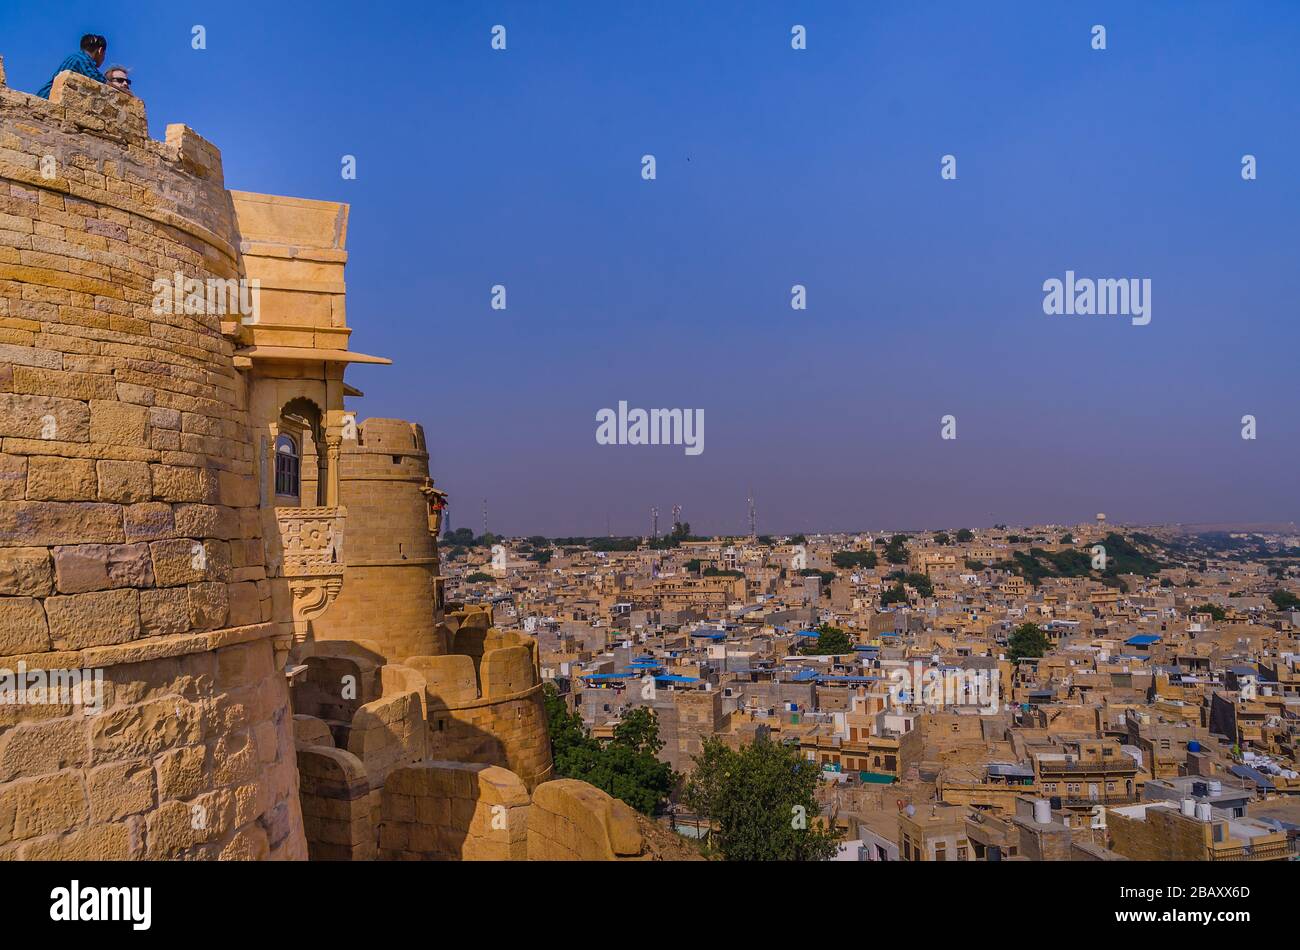 JAISALMER, RAJASTHAN, INDIA – 29 DE NOVIEMBRE de 2019: Vista panorámica del fuerte Dorado de Jaisalmer es el segundo fuerte más antiguo de Rajasthan, India. Foto de stock